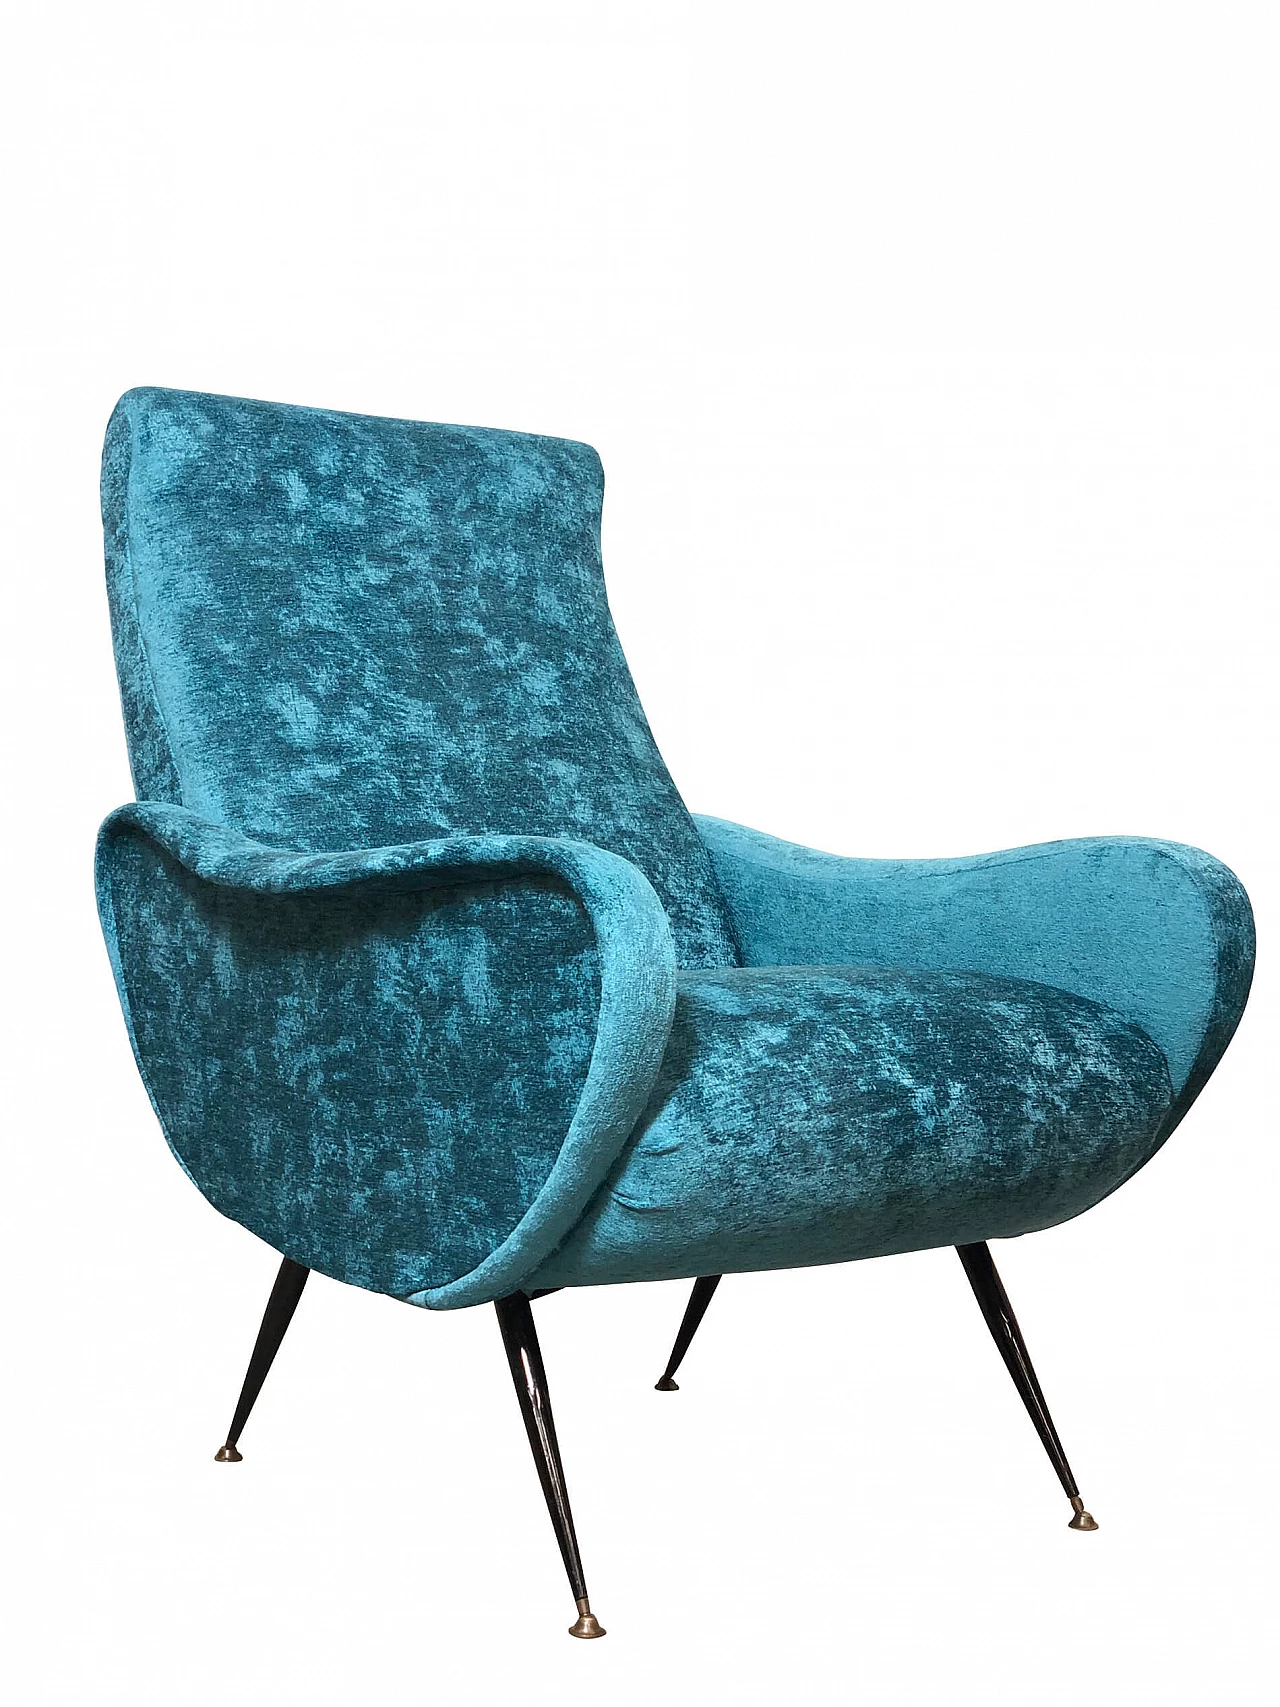 Lady style armchair by Marco Zanuso, 1950s 1273404